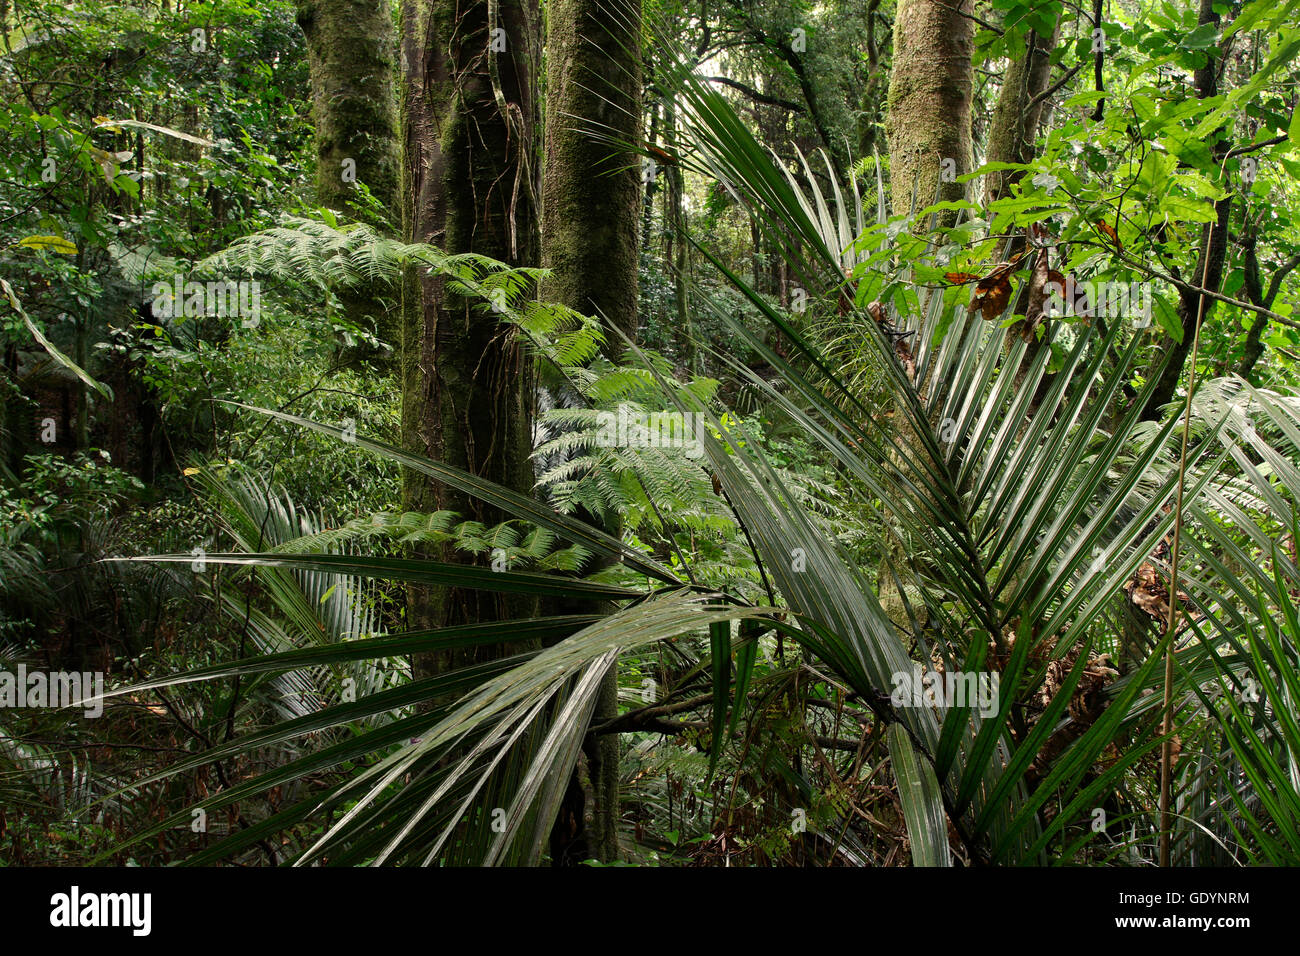 Lush green foliage in tropical jungle Stock Photo